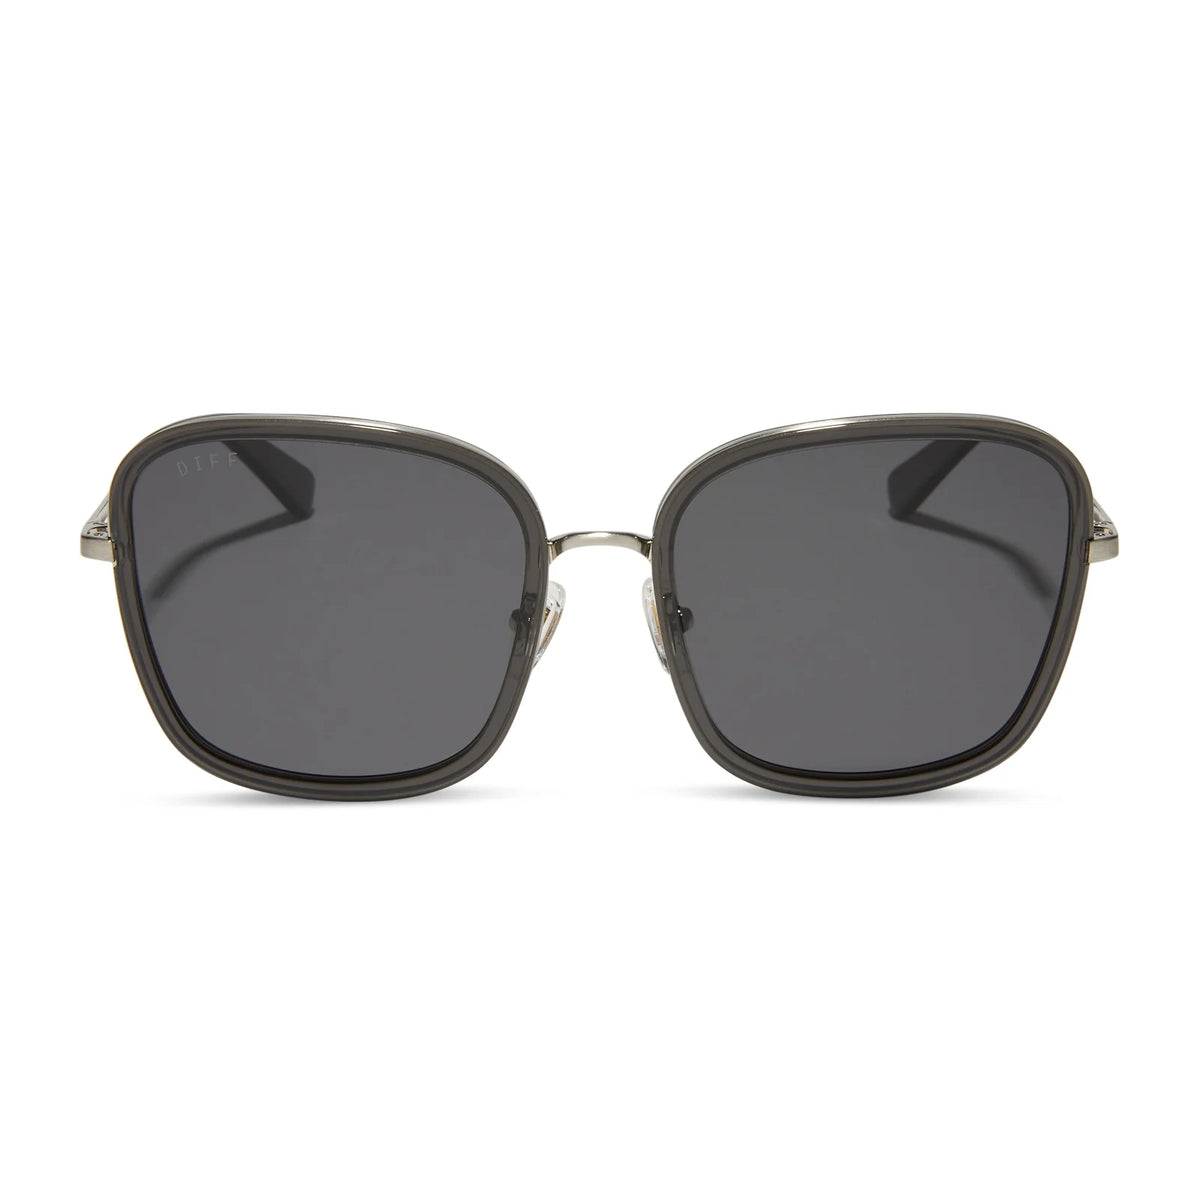 DIFF Eyewear Sunglasses - Genevieve Black Smoke Crystal + Grey Polarized